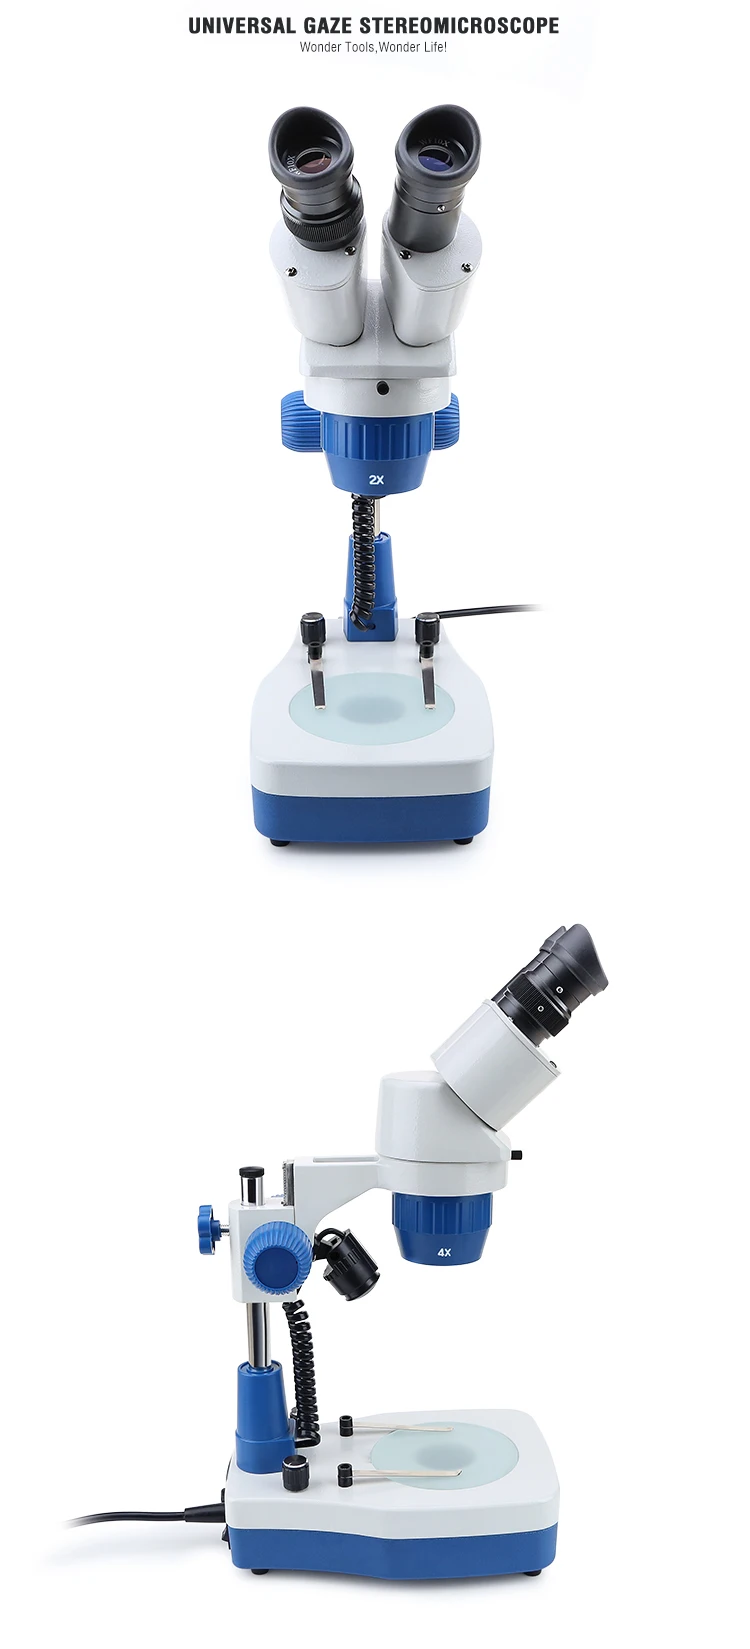 BAKU ba 007 portable binocular scanning electron repair mobile phone digital microscope